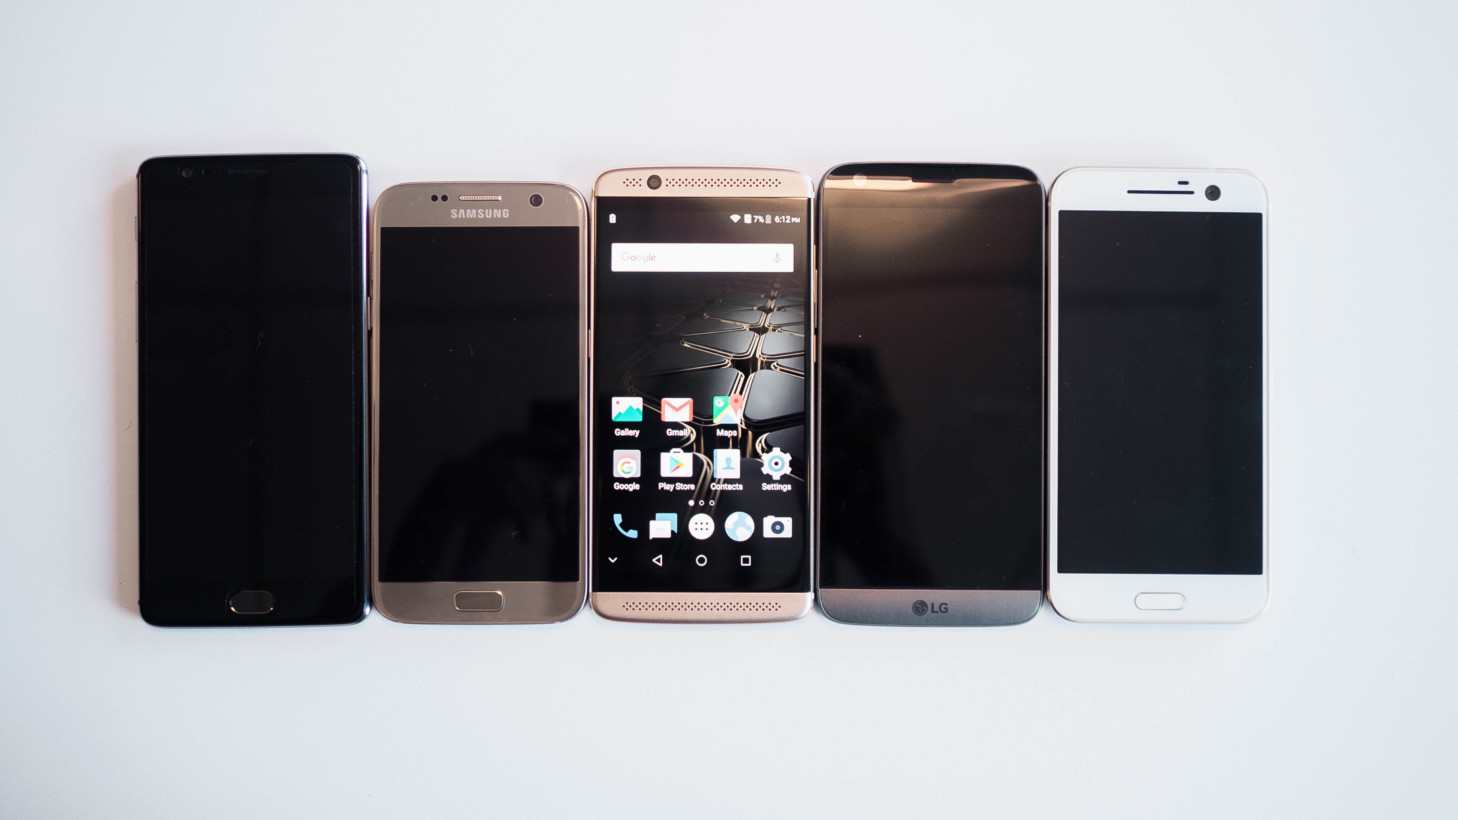 Left to Right: OnePlus 3, Samsung S7, ZTE Axon 7 Mini, LG G5, HTC 10